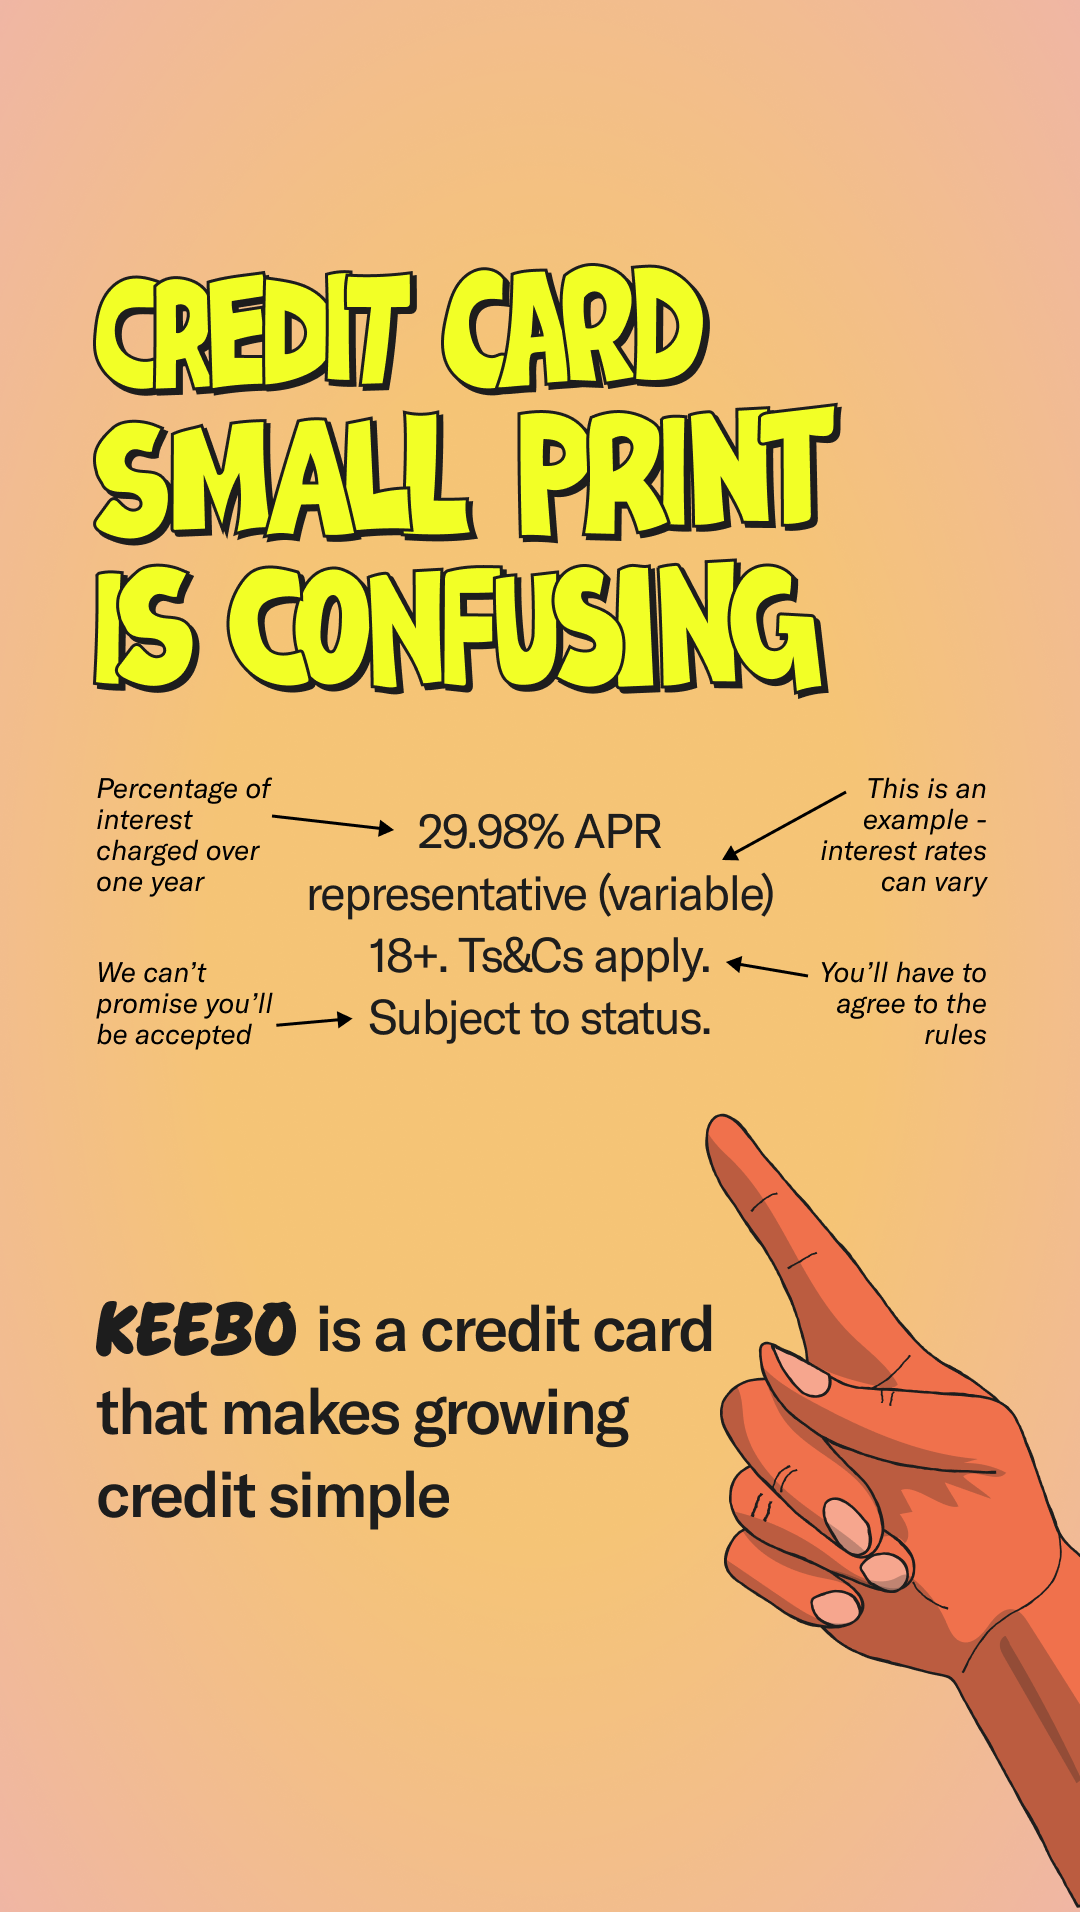 Credit cards make profit - Reels.png